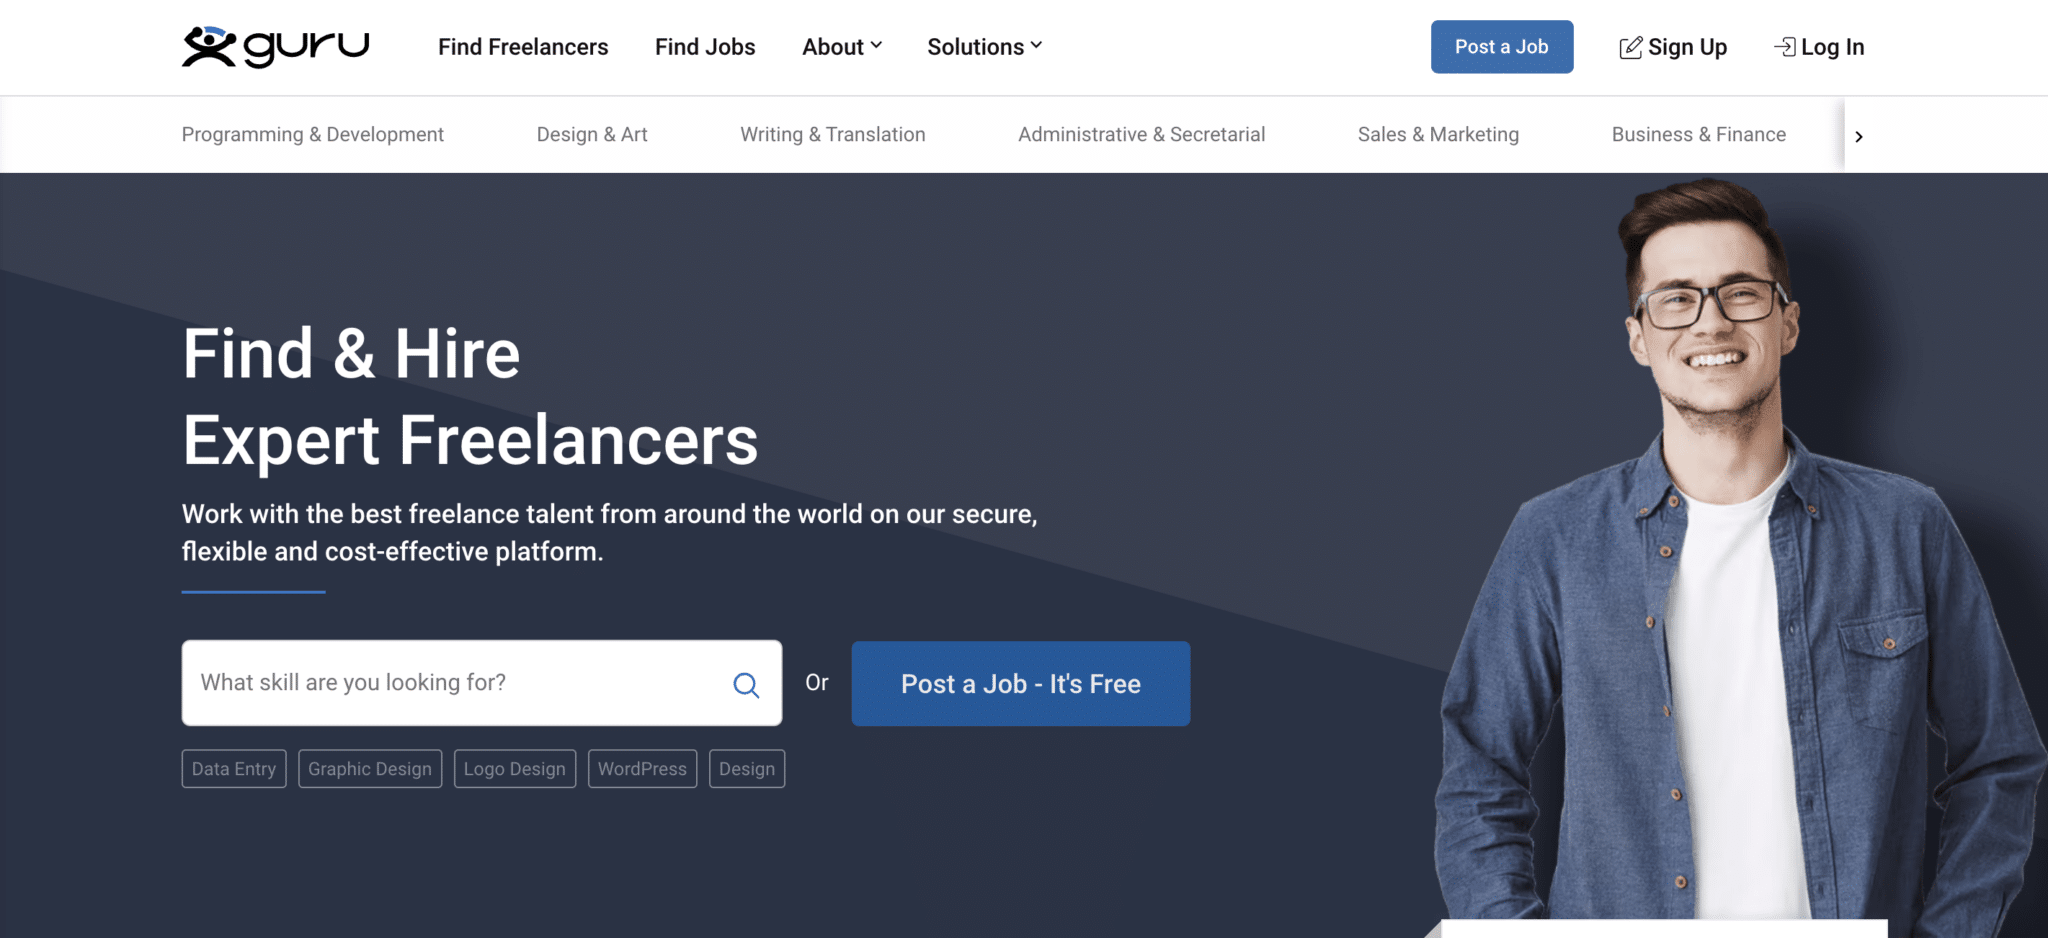 Guru screenshot: Website for Freelance Graphic Designers to Find Work